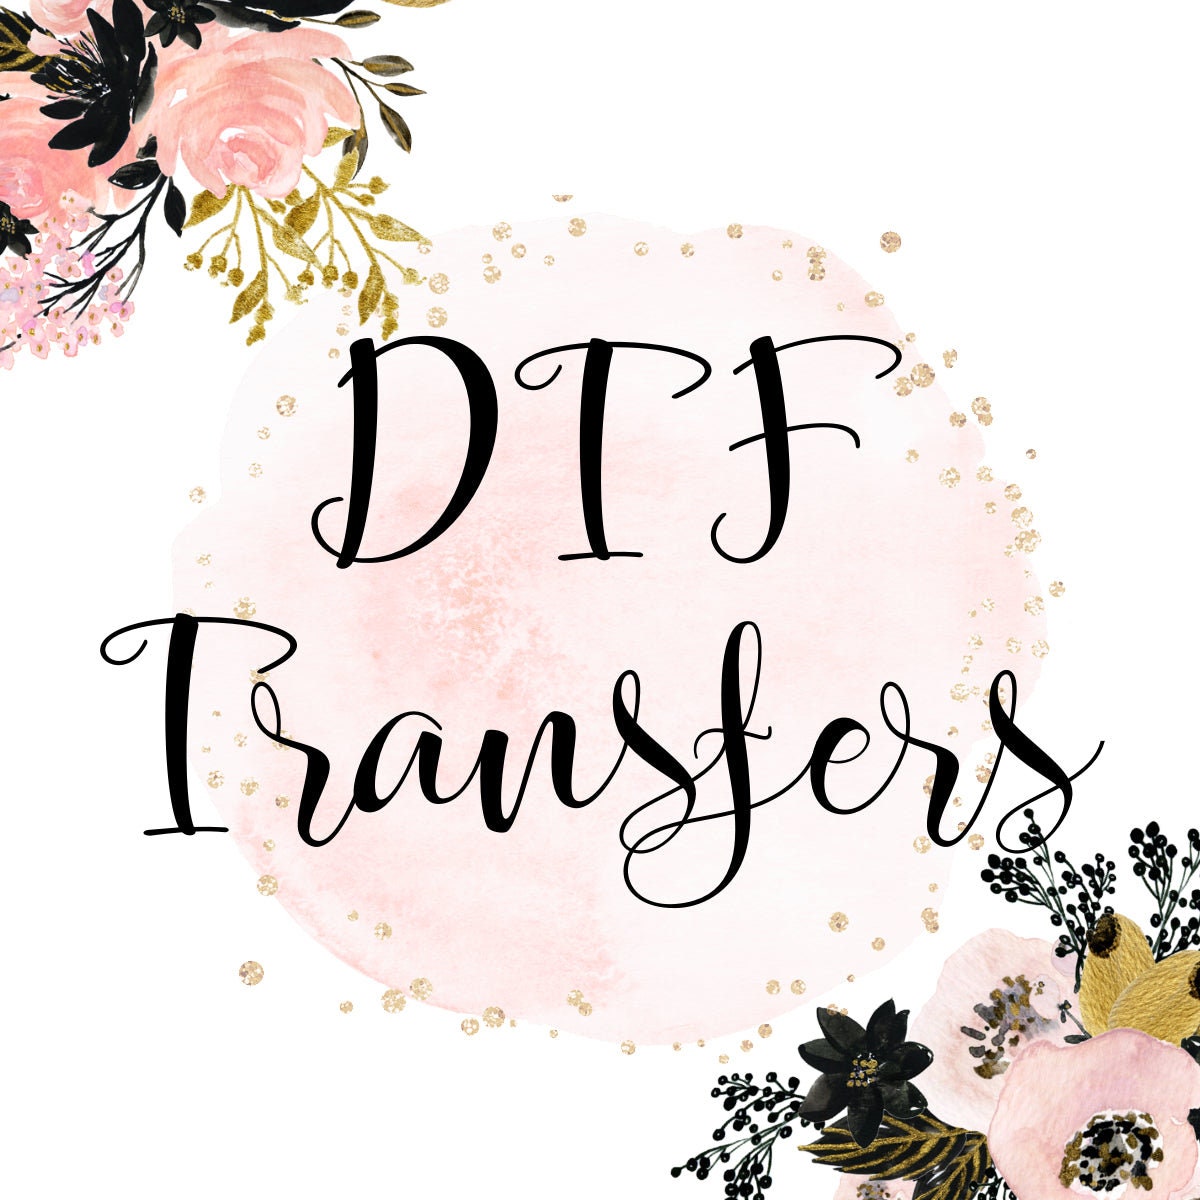 Custom DTF Transfer – The Lily Pad -TLP